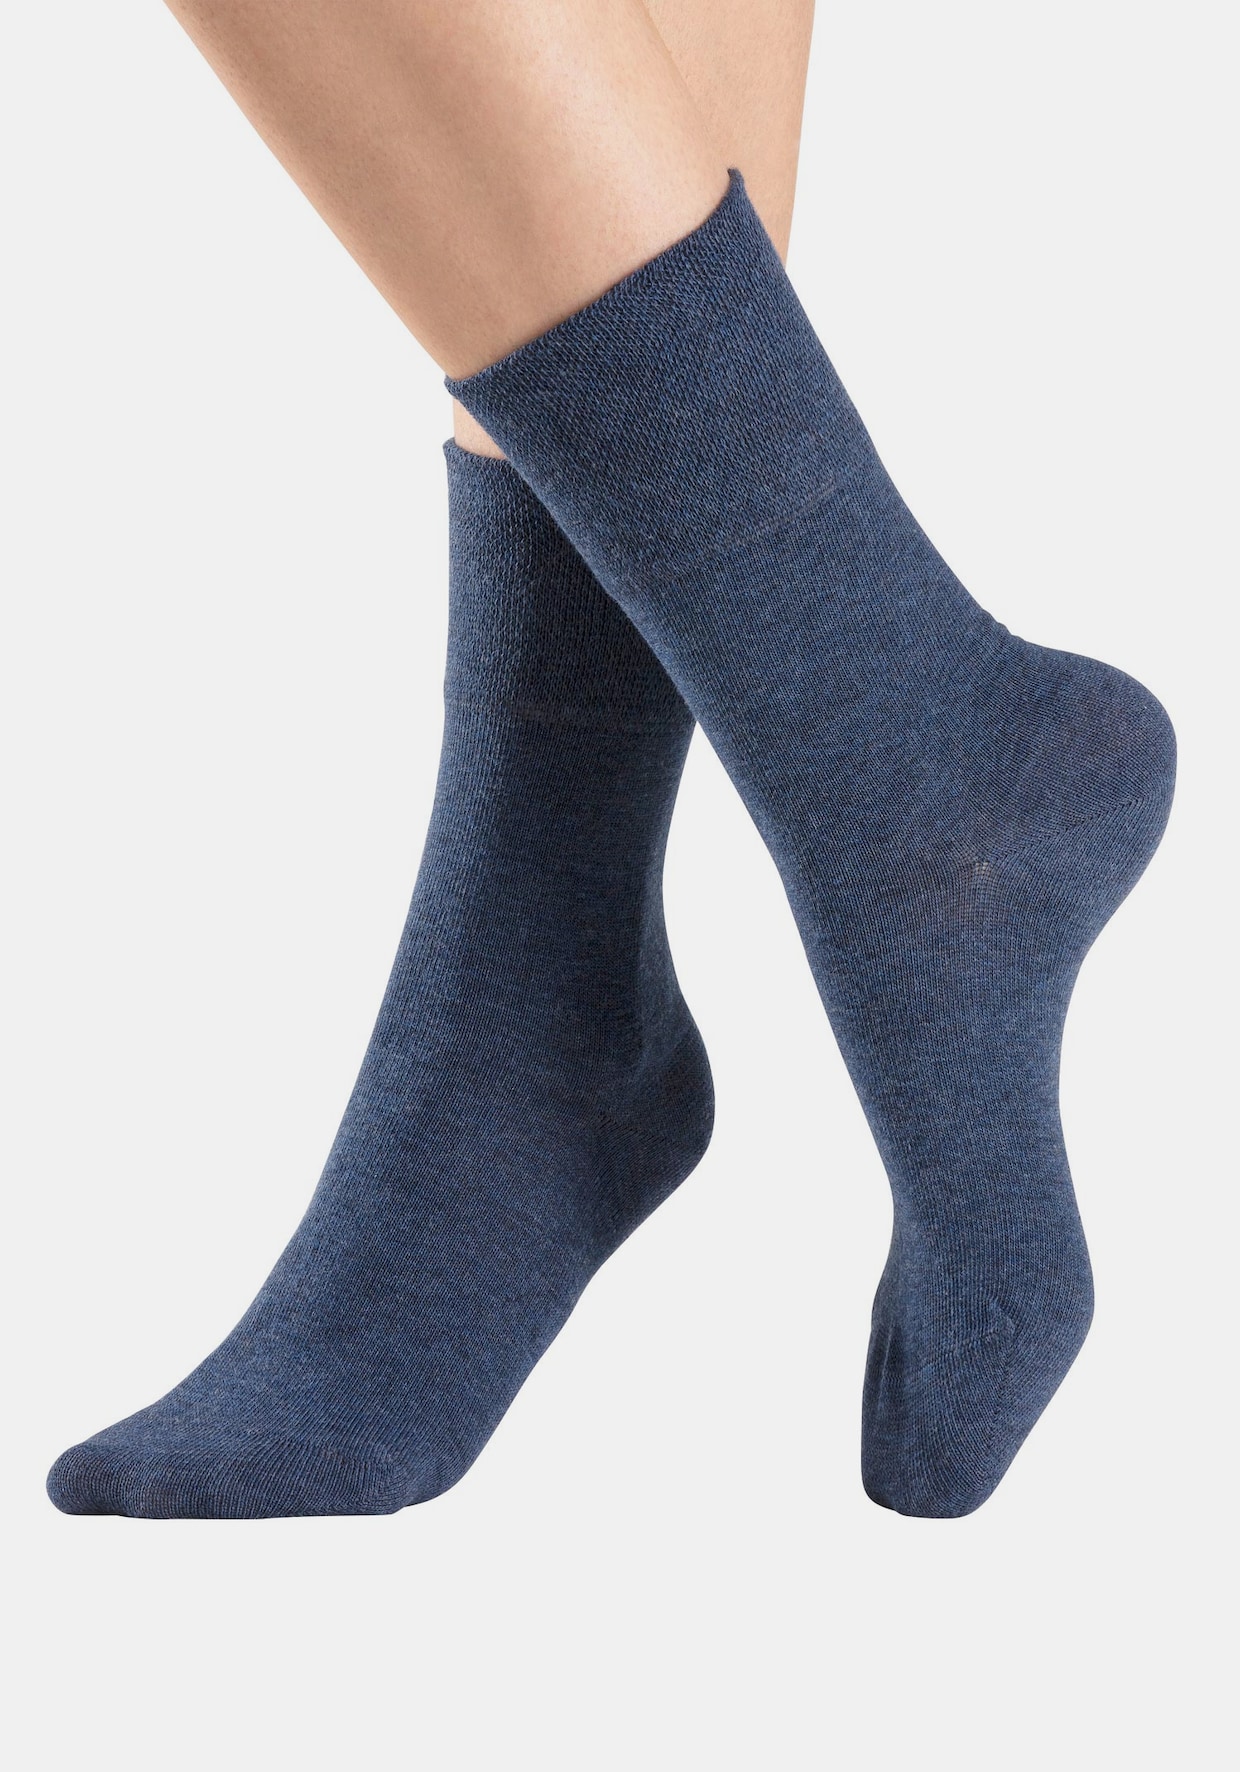 H.I.S Socken - 2x jeans + 2x schwarz + 2x grau-meliert